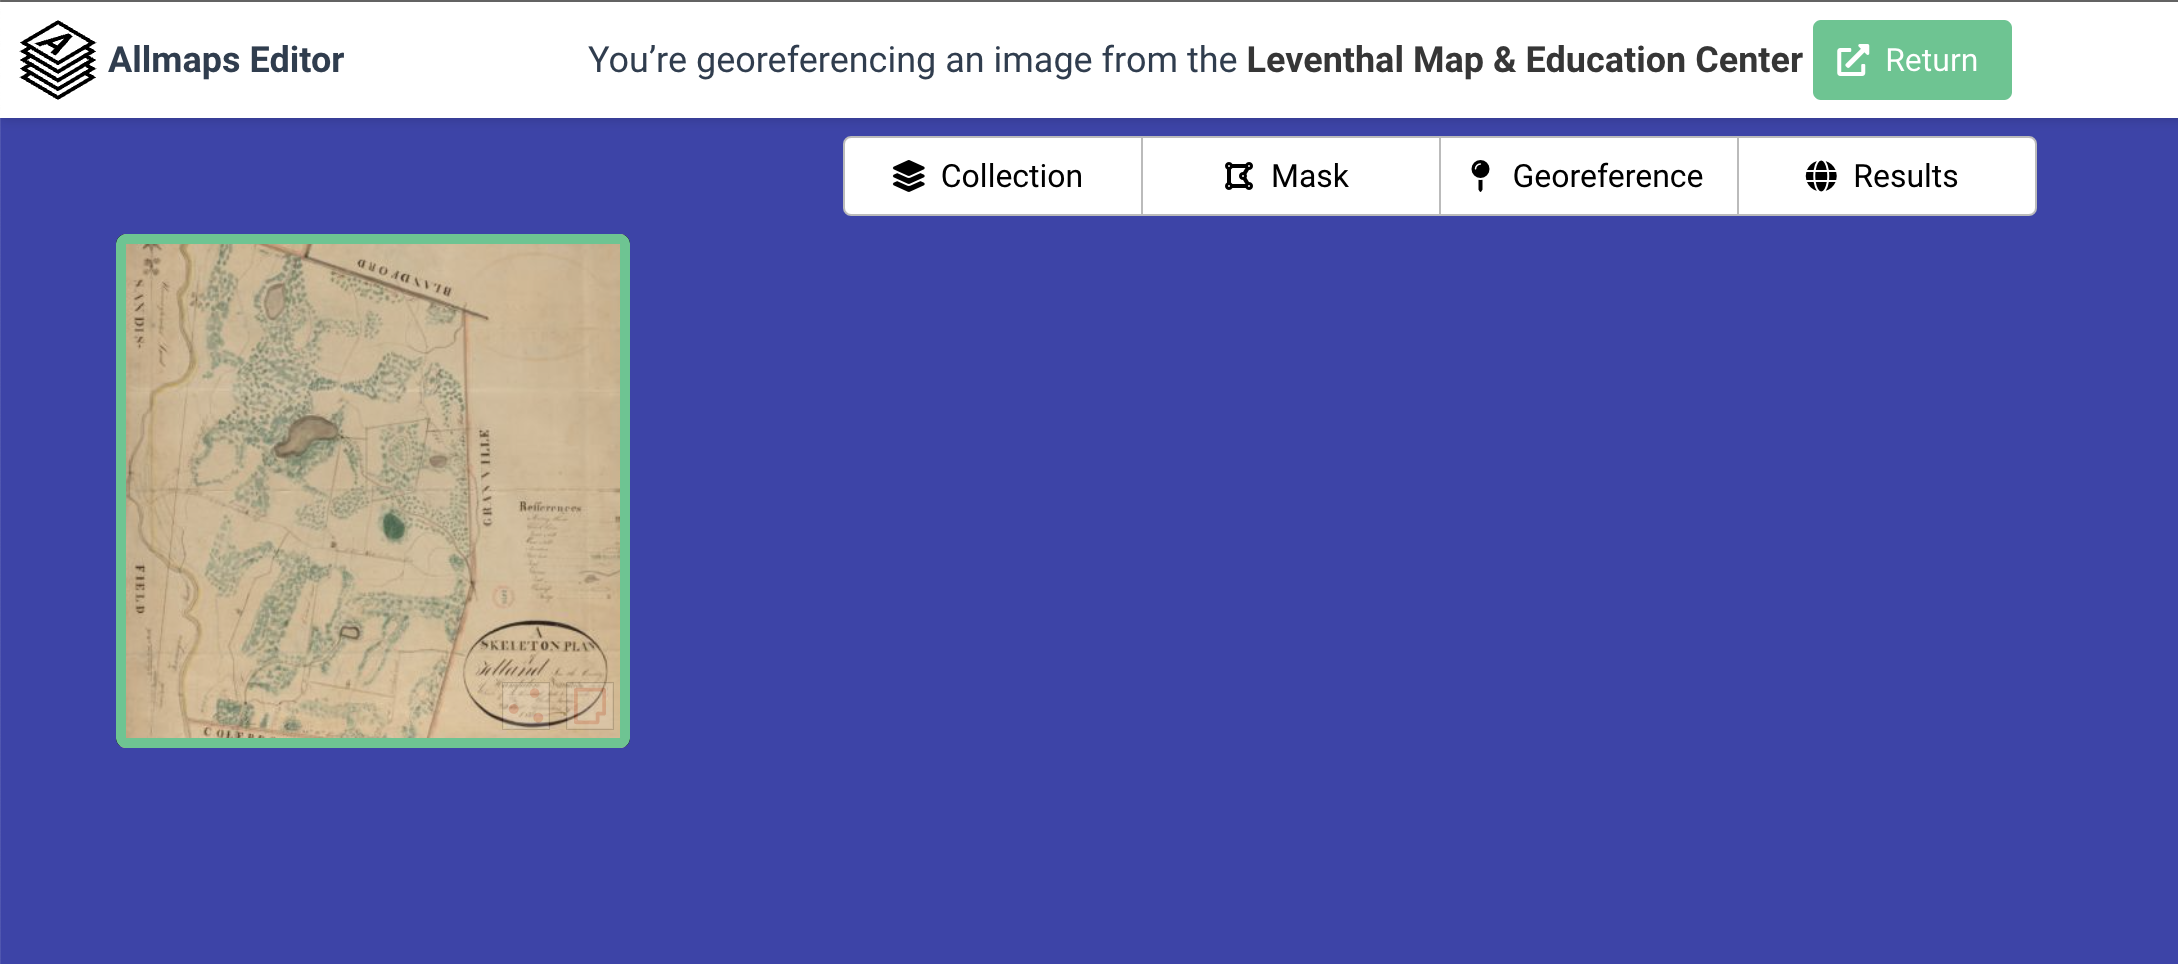 Easily georeference LMEC maps using Allmaps Editor!